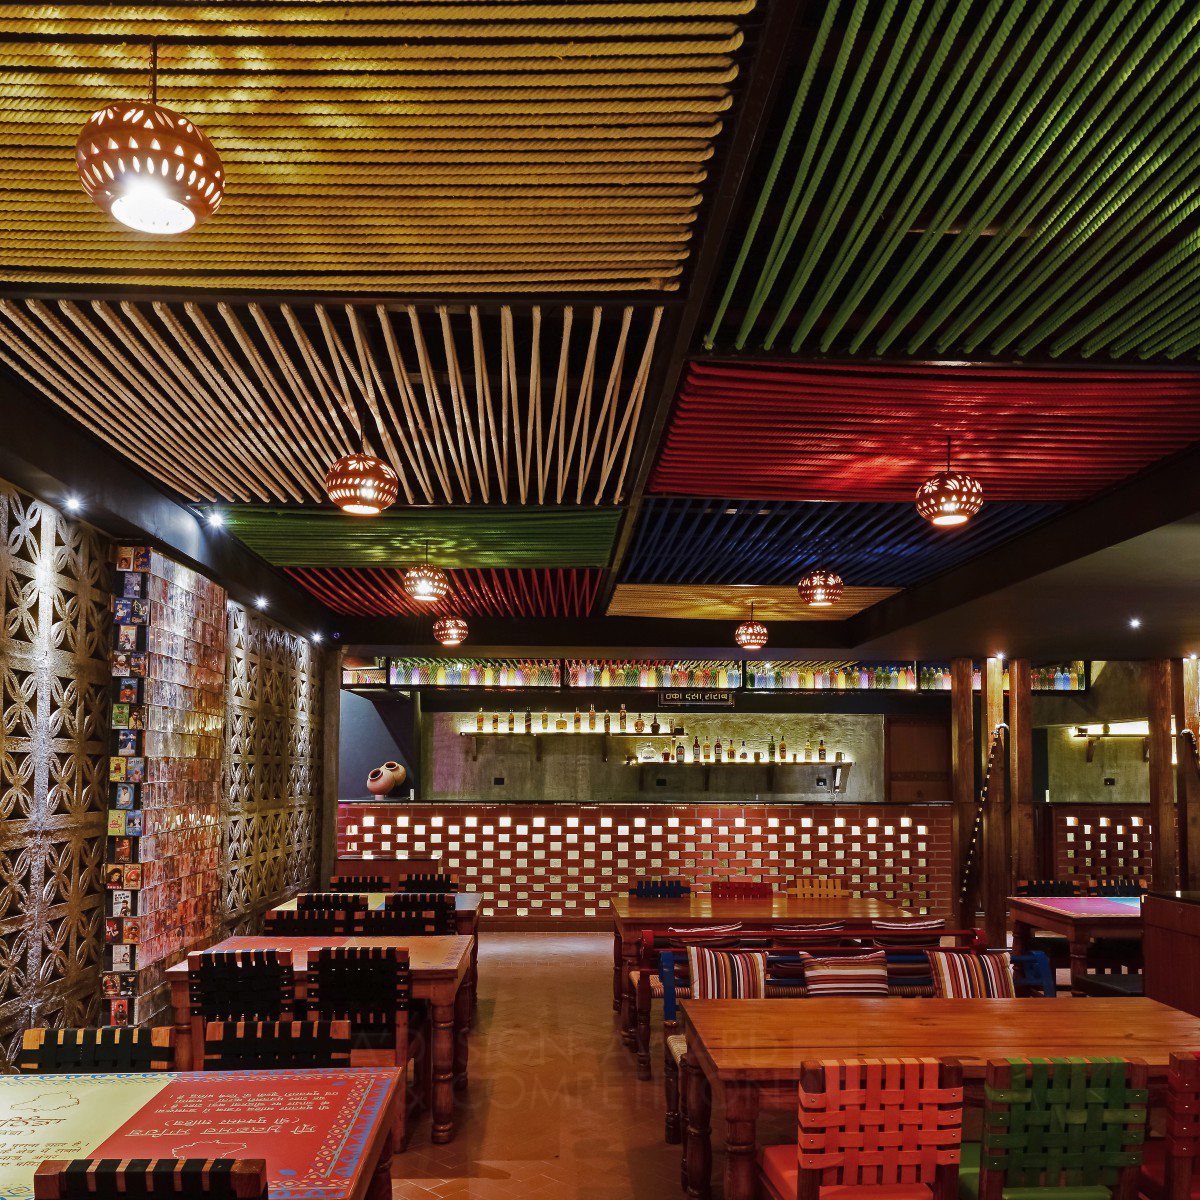 Rangla Punjab Restaurant and Bar by Ketan Jawdekar